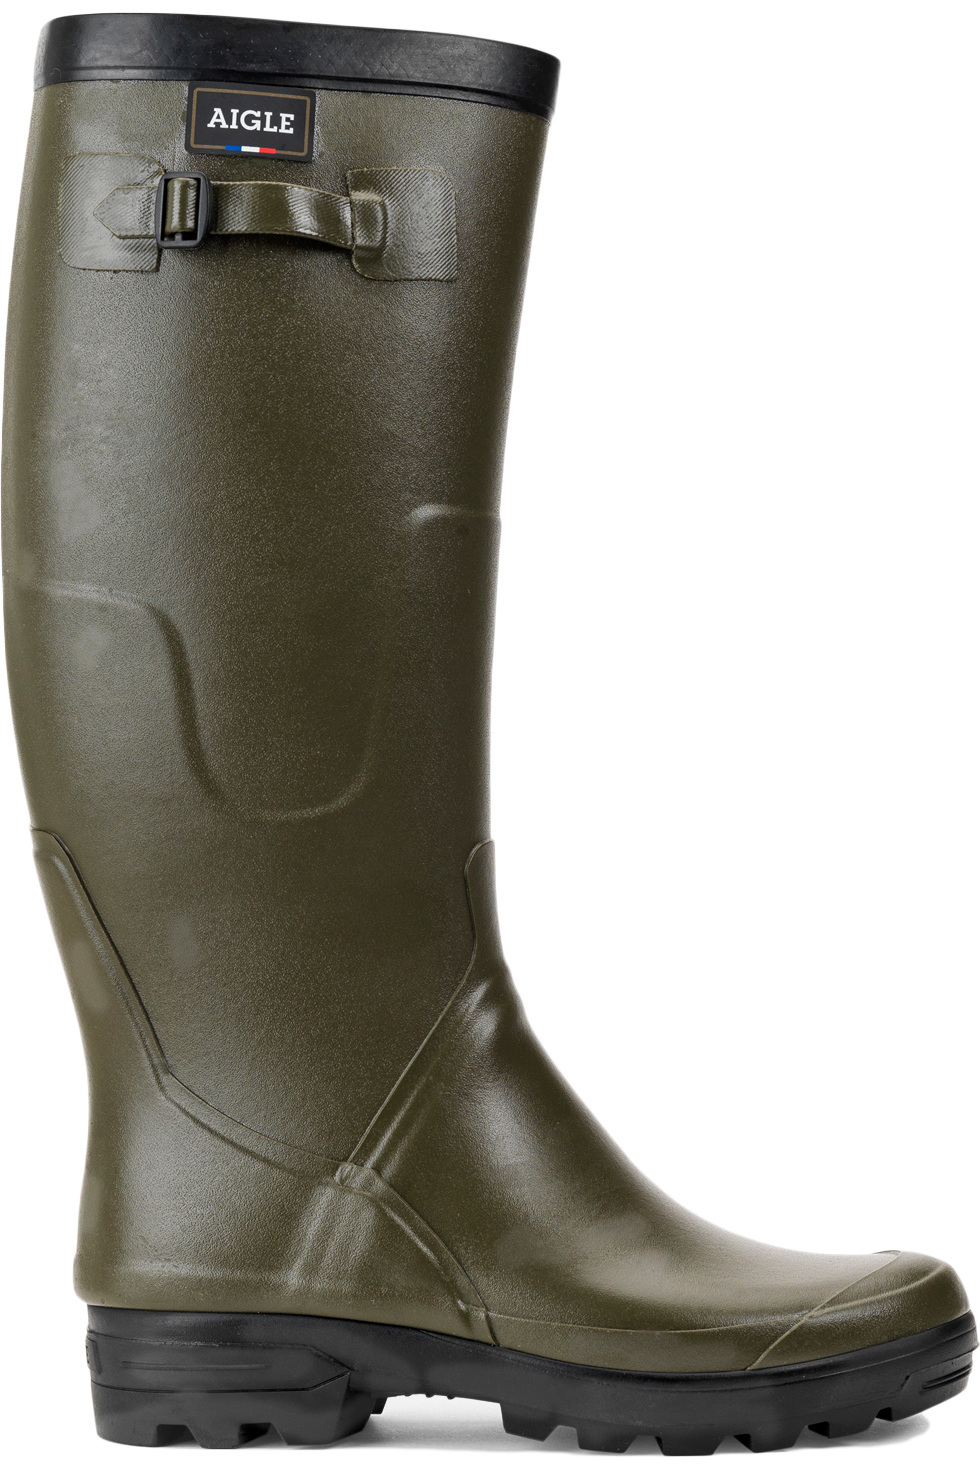 2021 Aigle Benyl Wellie - Khaki Womens - Footwear - Wellies | The Drillshed